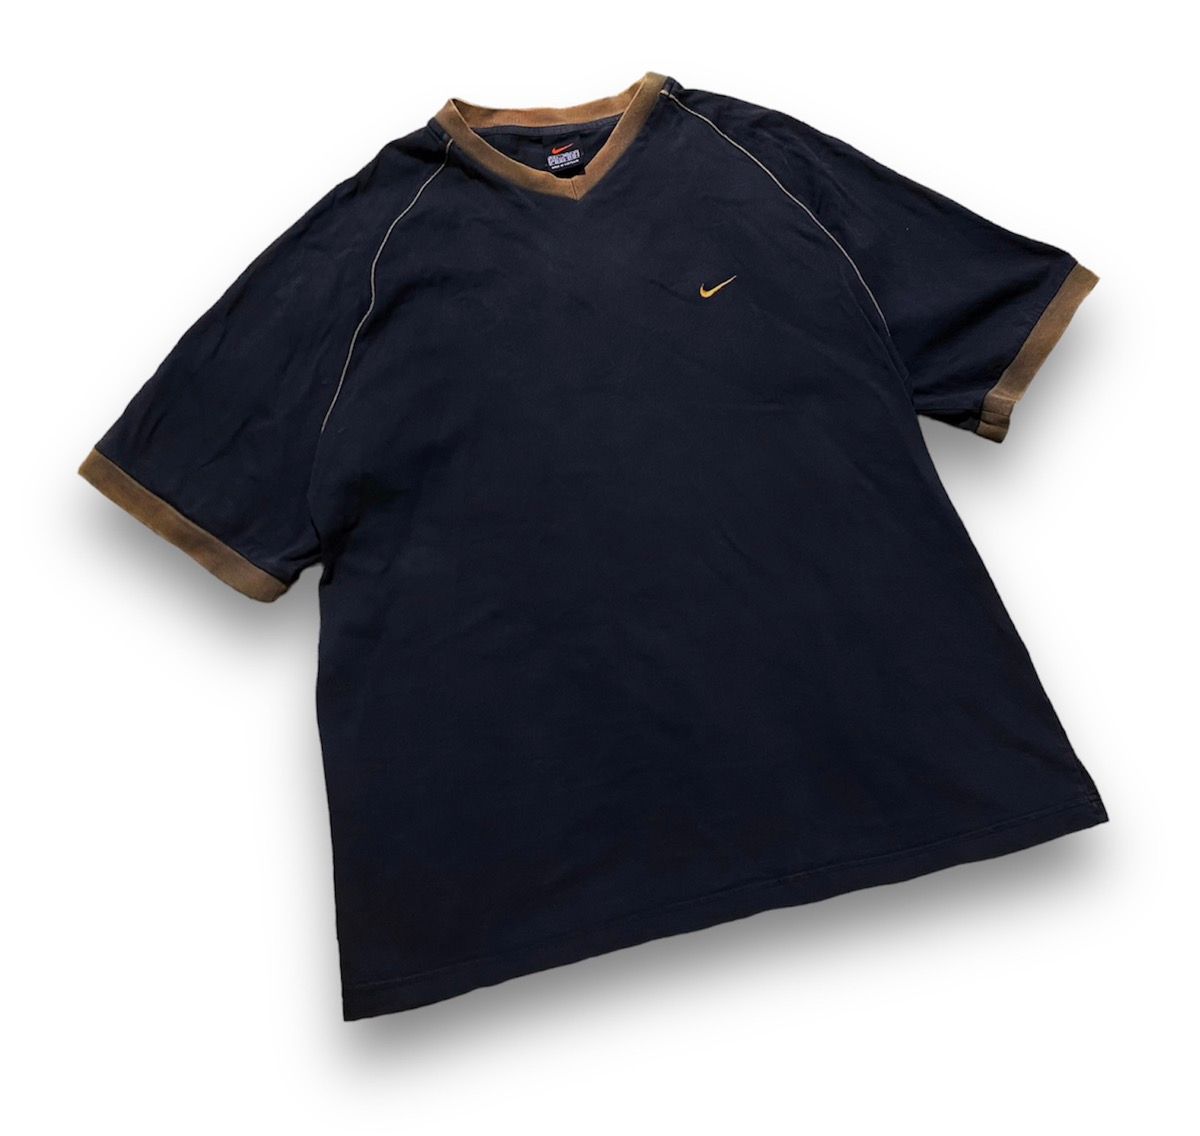 Nike T-Shirt Vintsge Y2K Size L/XL Made in Portugal - 2